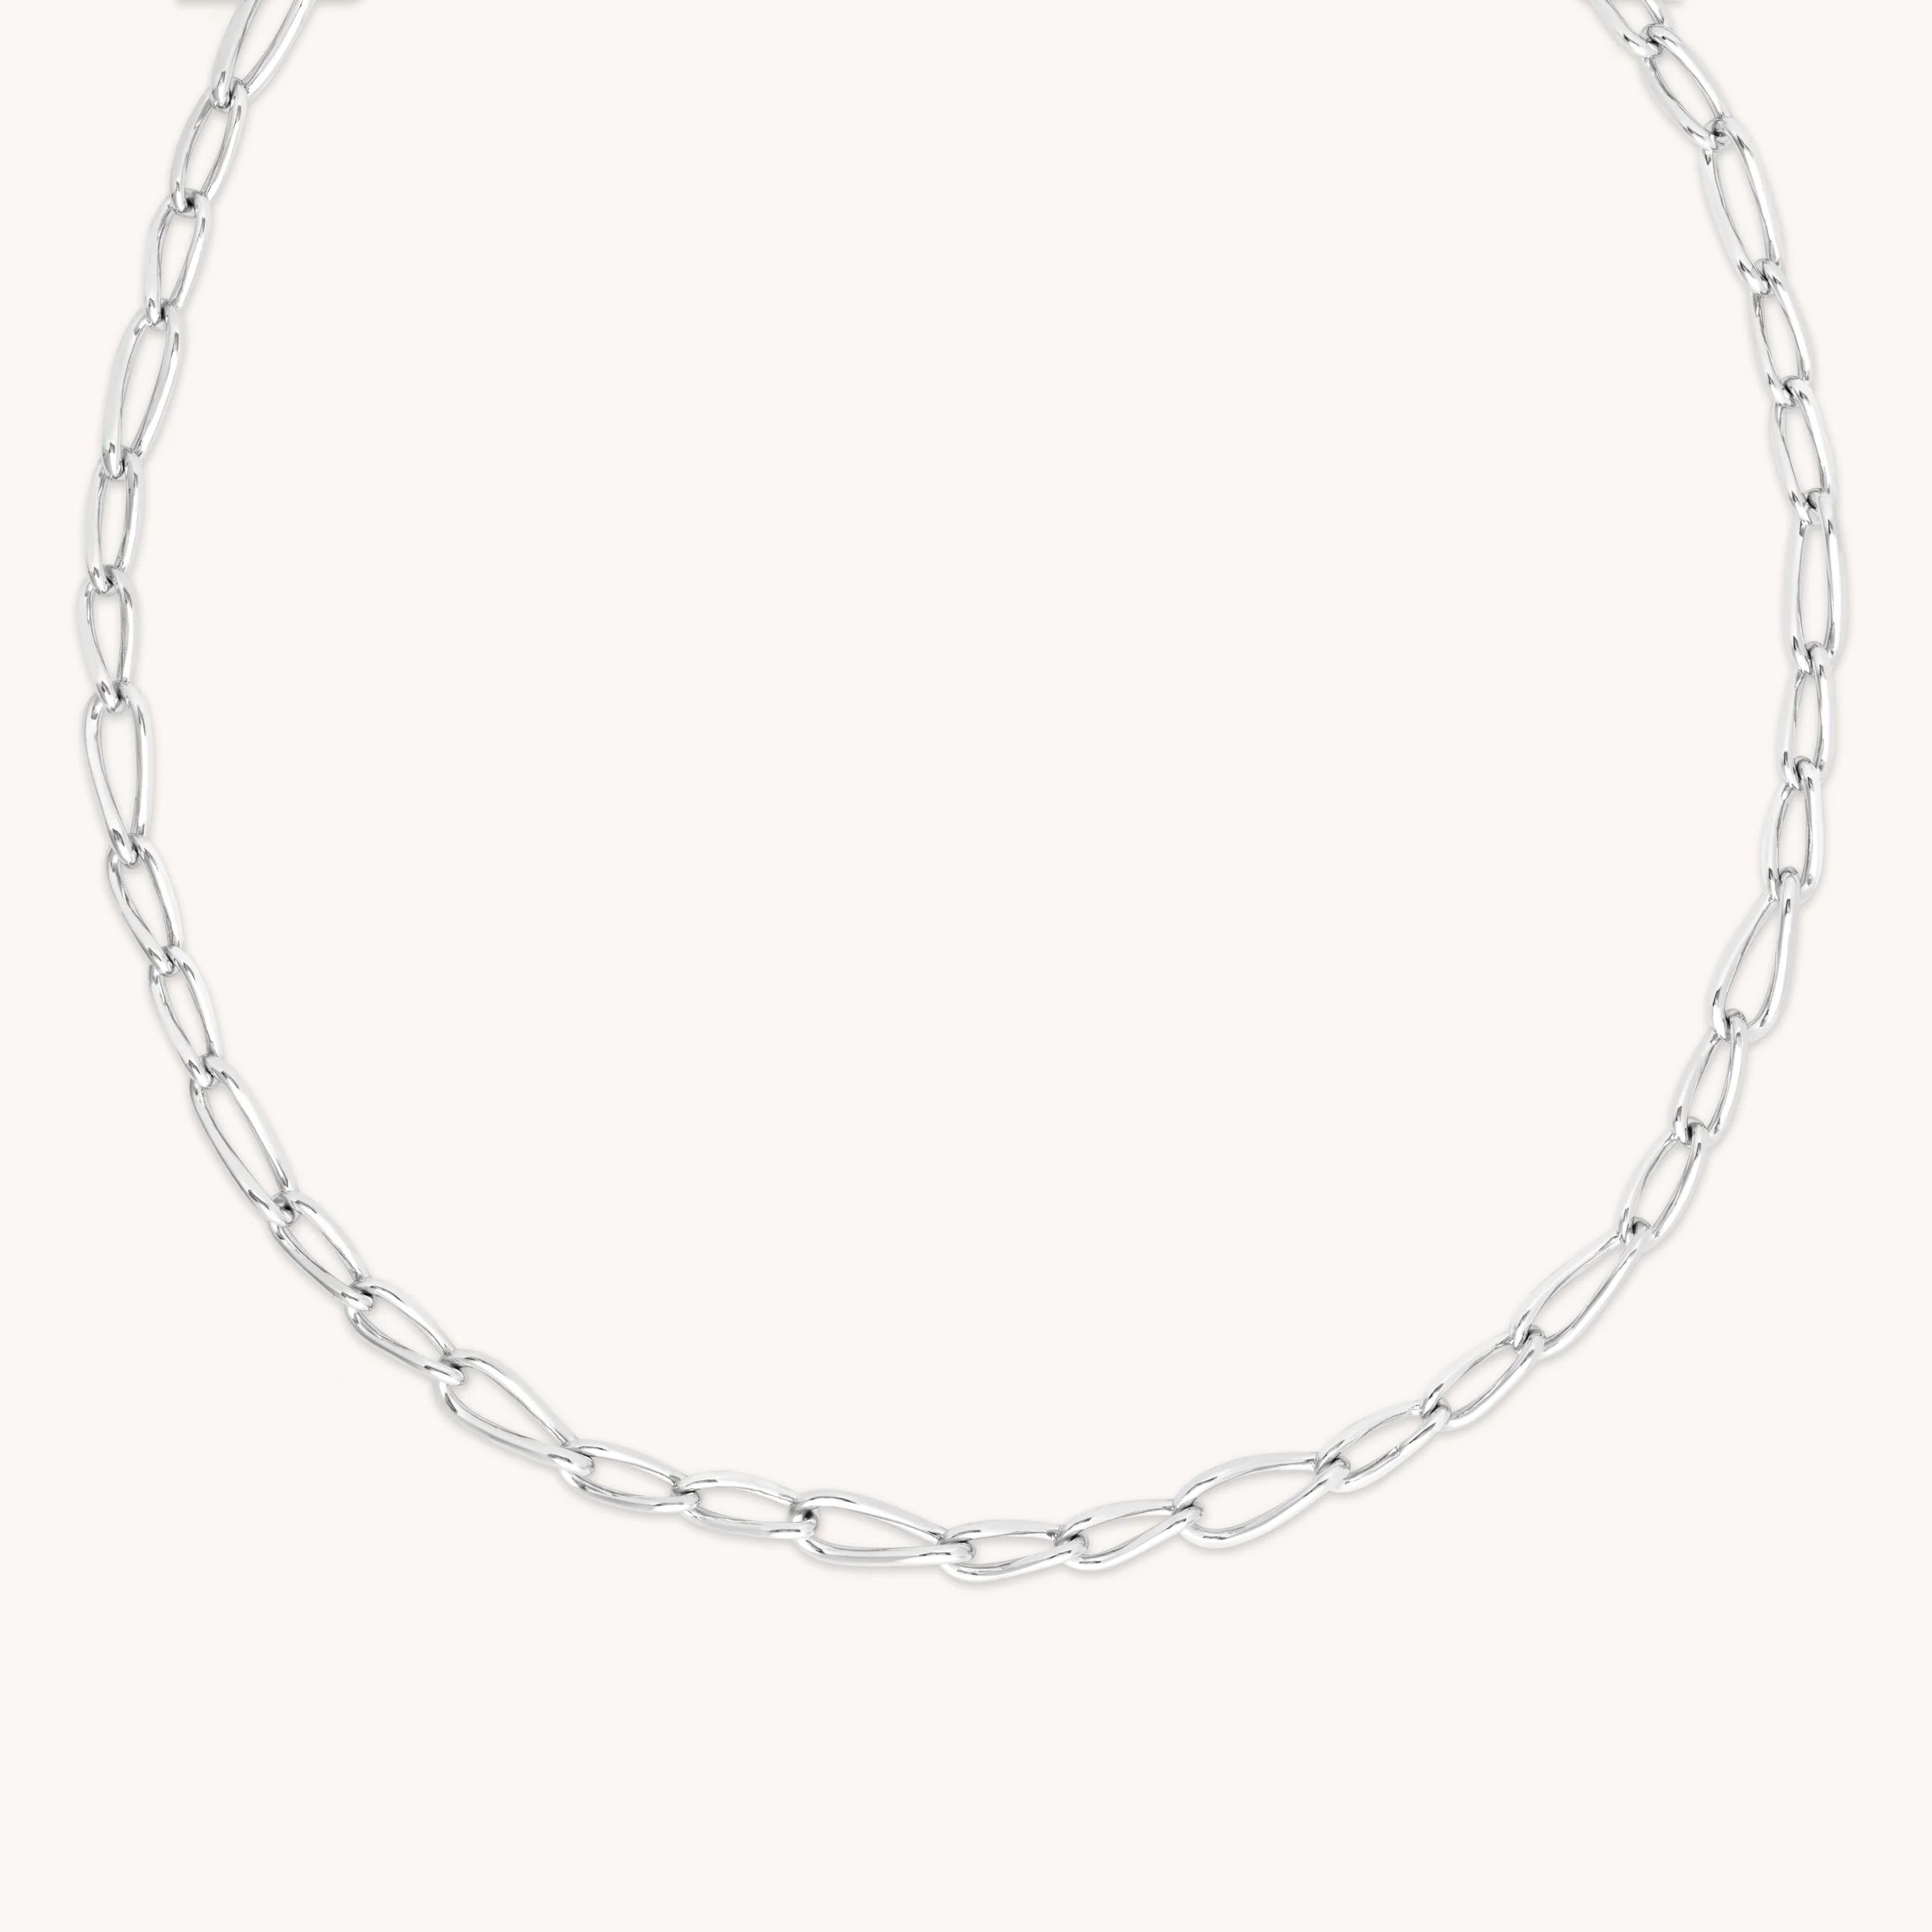 Infinite Chain Necklace in Silver | Astrid & Miyu EU